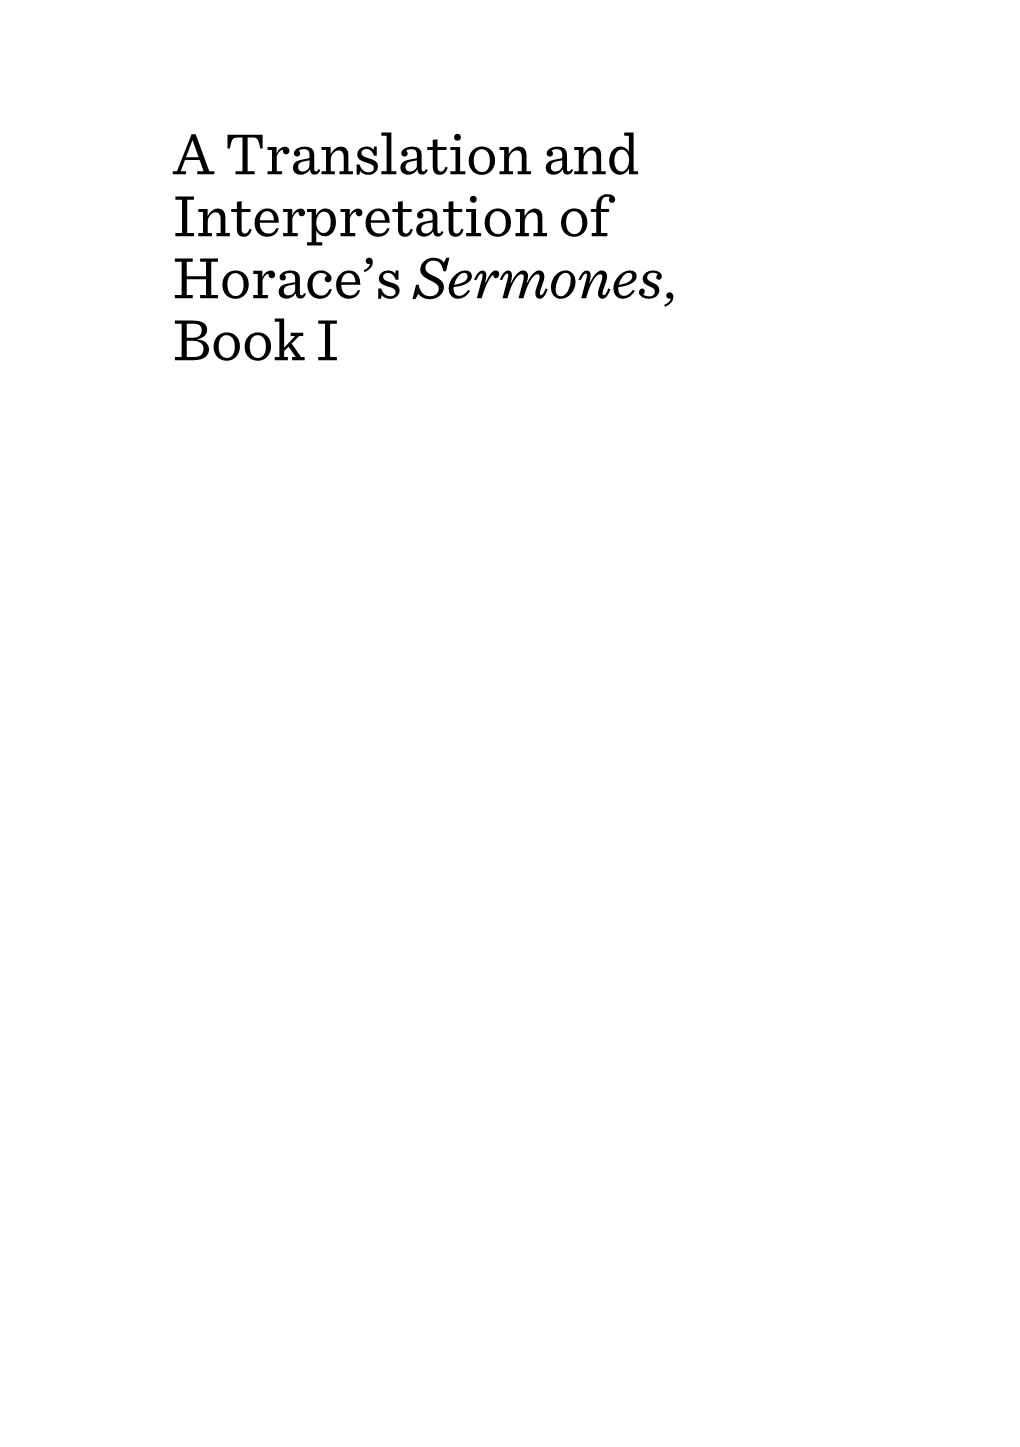 A Translation and Interpretation of Horace's Sermones, Book I